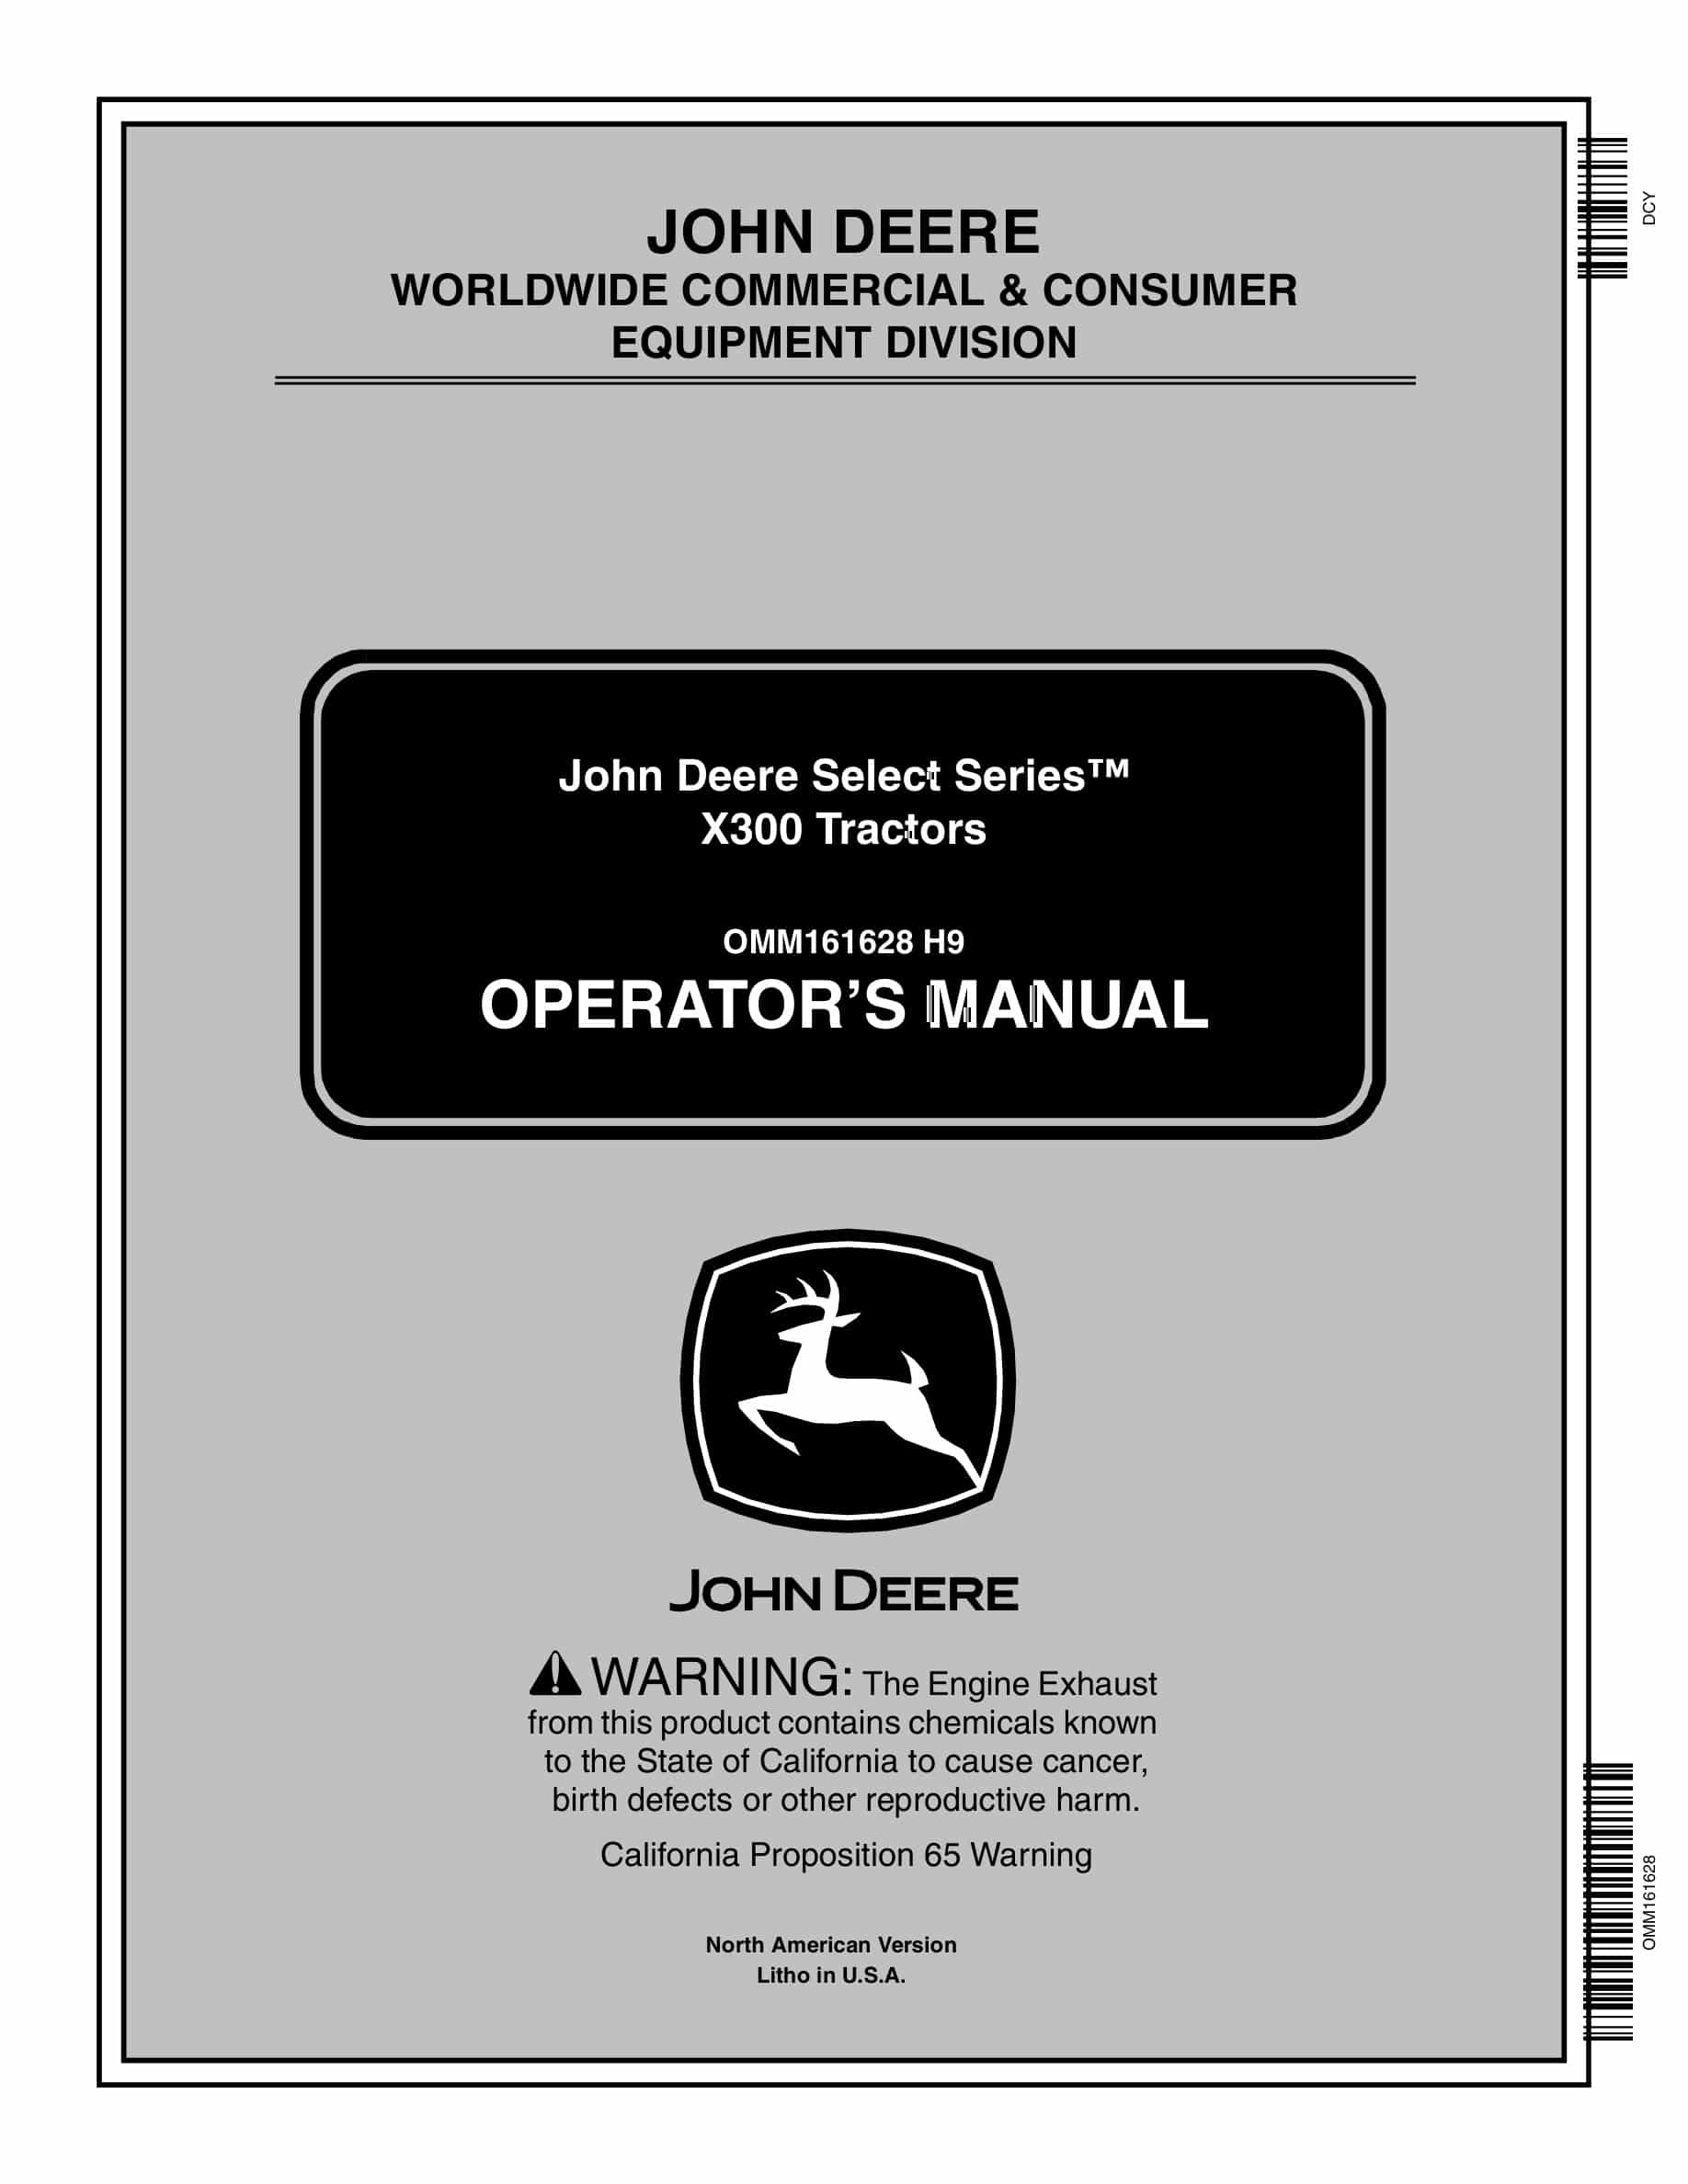 John Deere X300 Tractor Operator Manual OMM161628-1